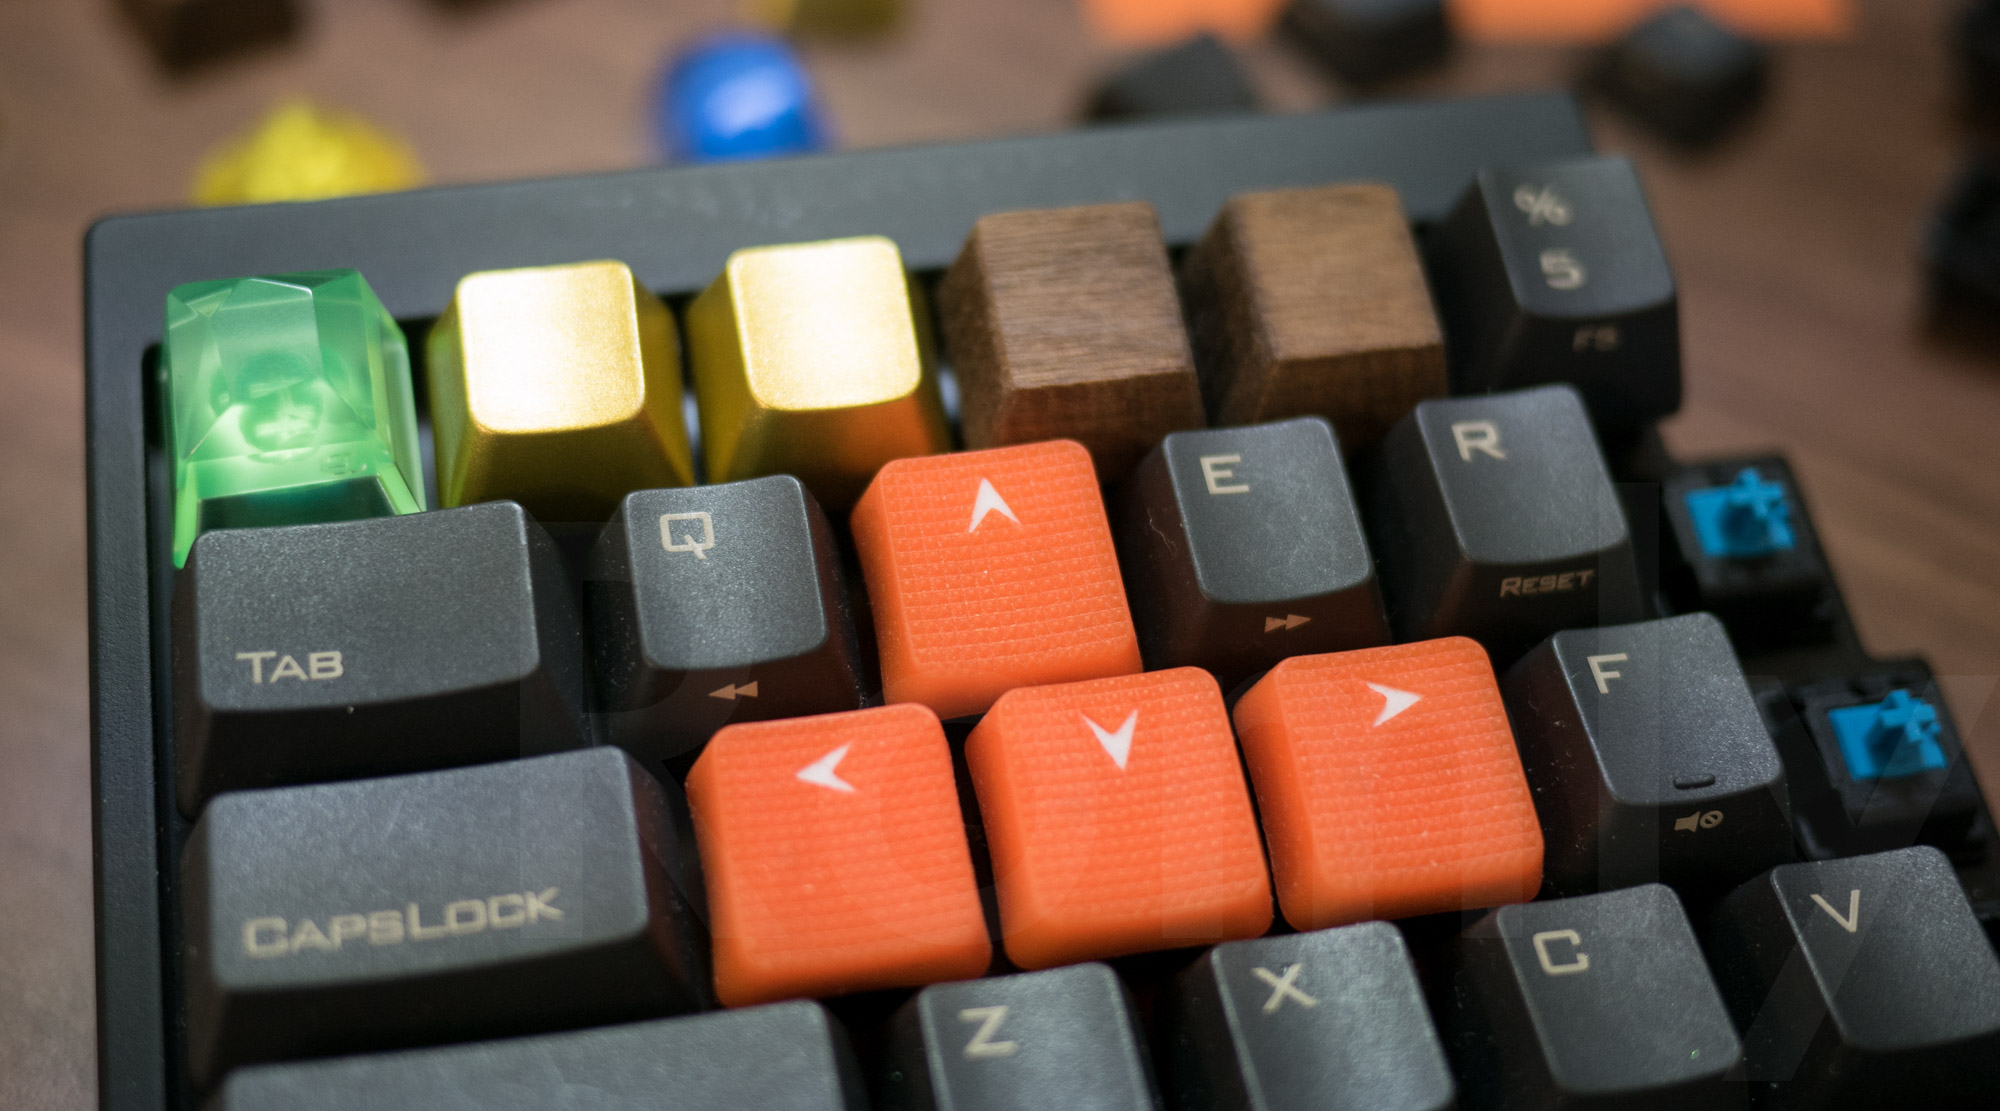 My keycaps on keyboard